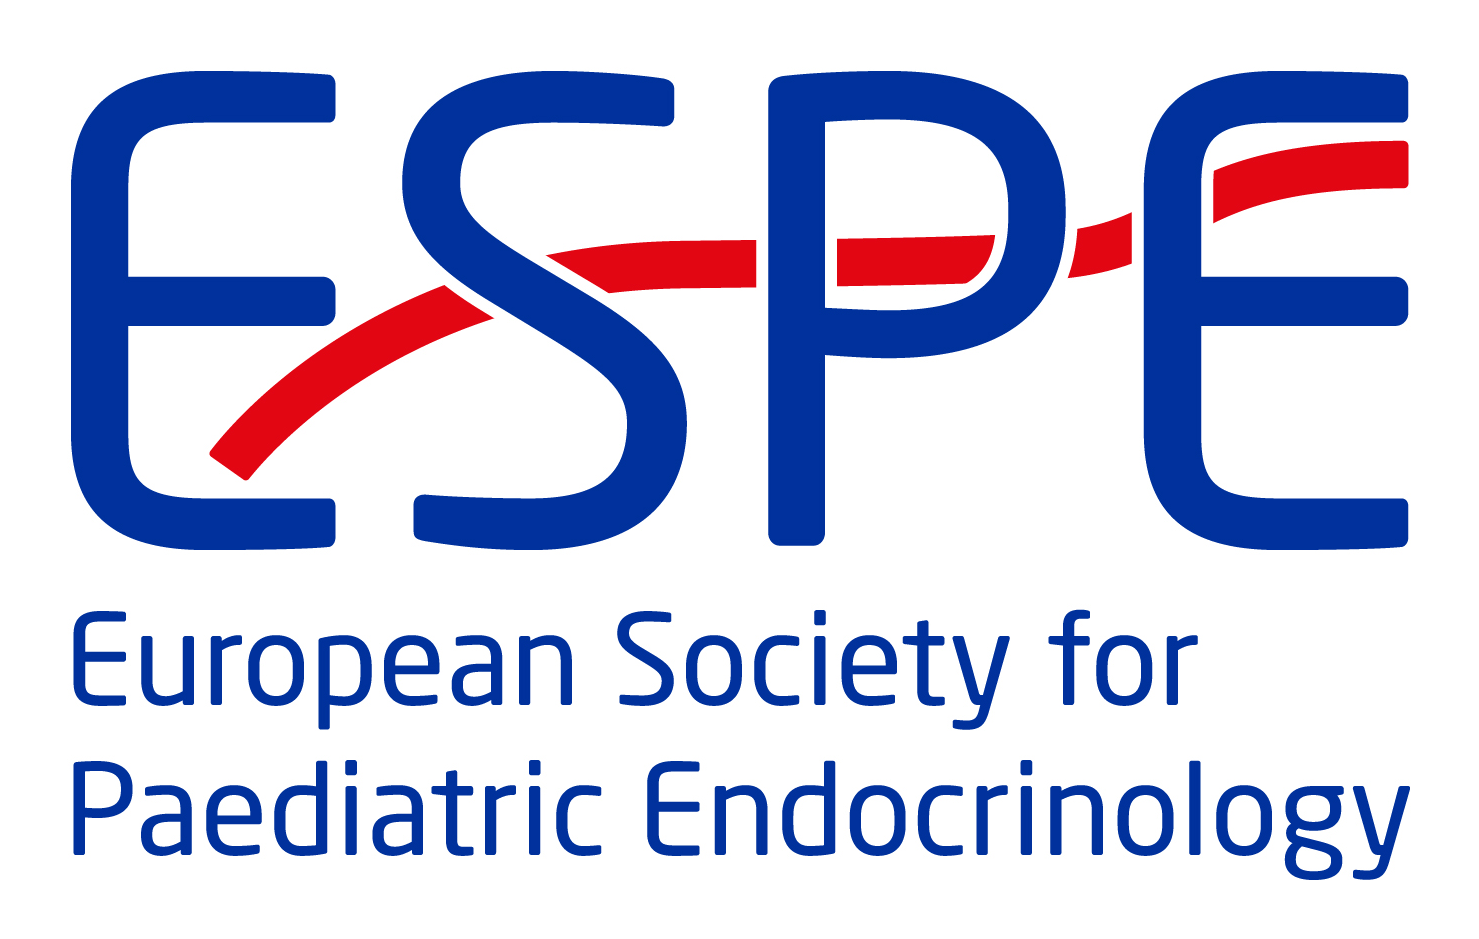 European Society for Paediatric Endocrinology (ESPE)